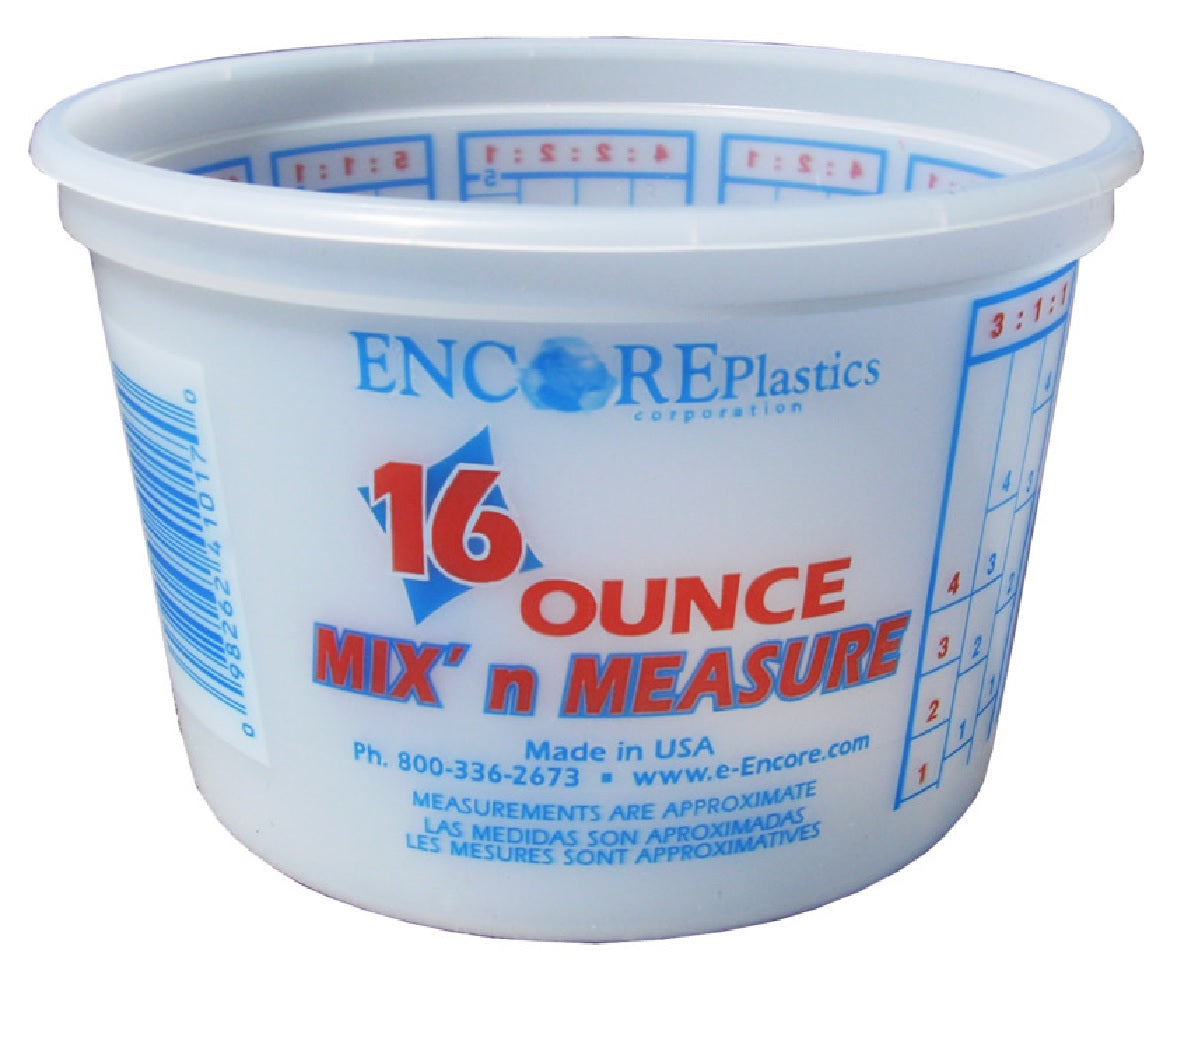 Encore Plastics 300352 Measure Plastic Container, 16 Ounce